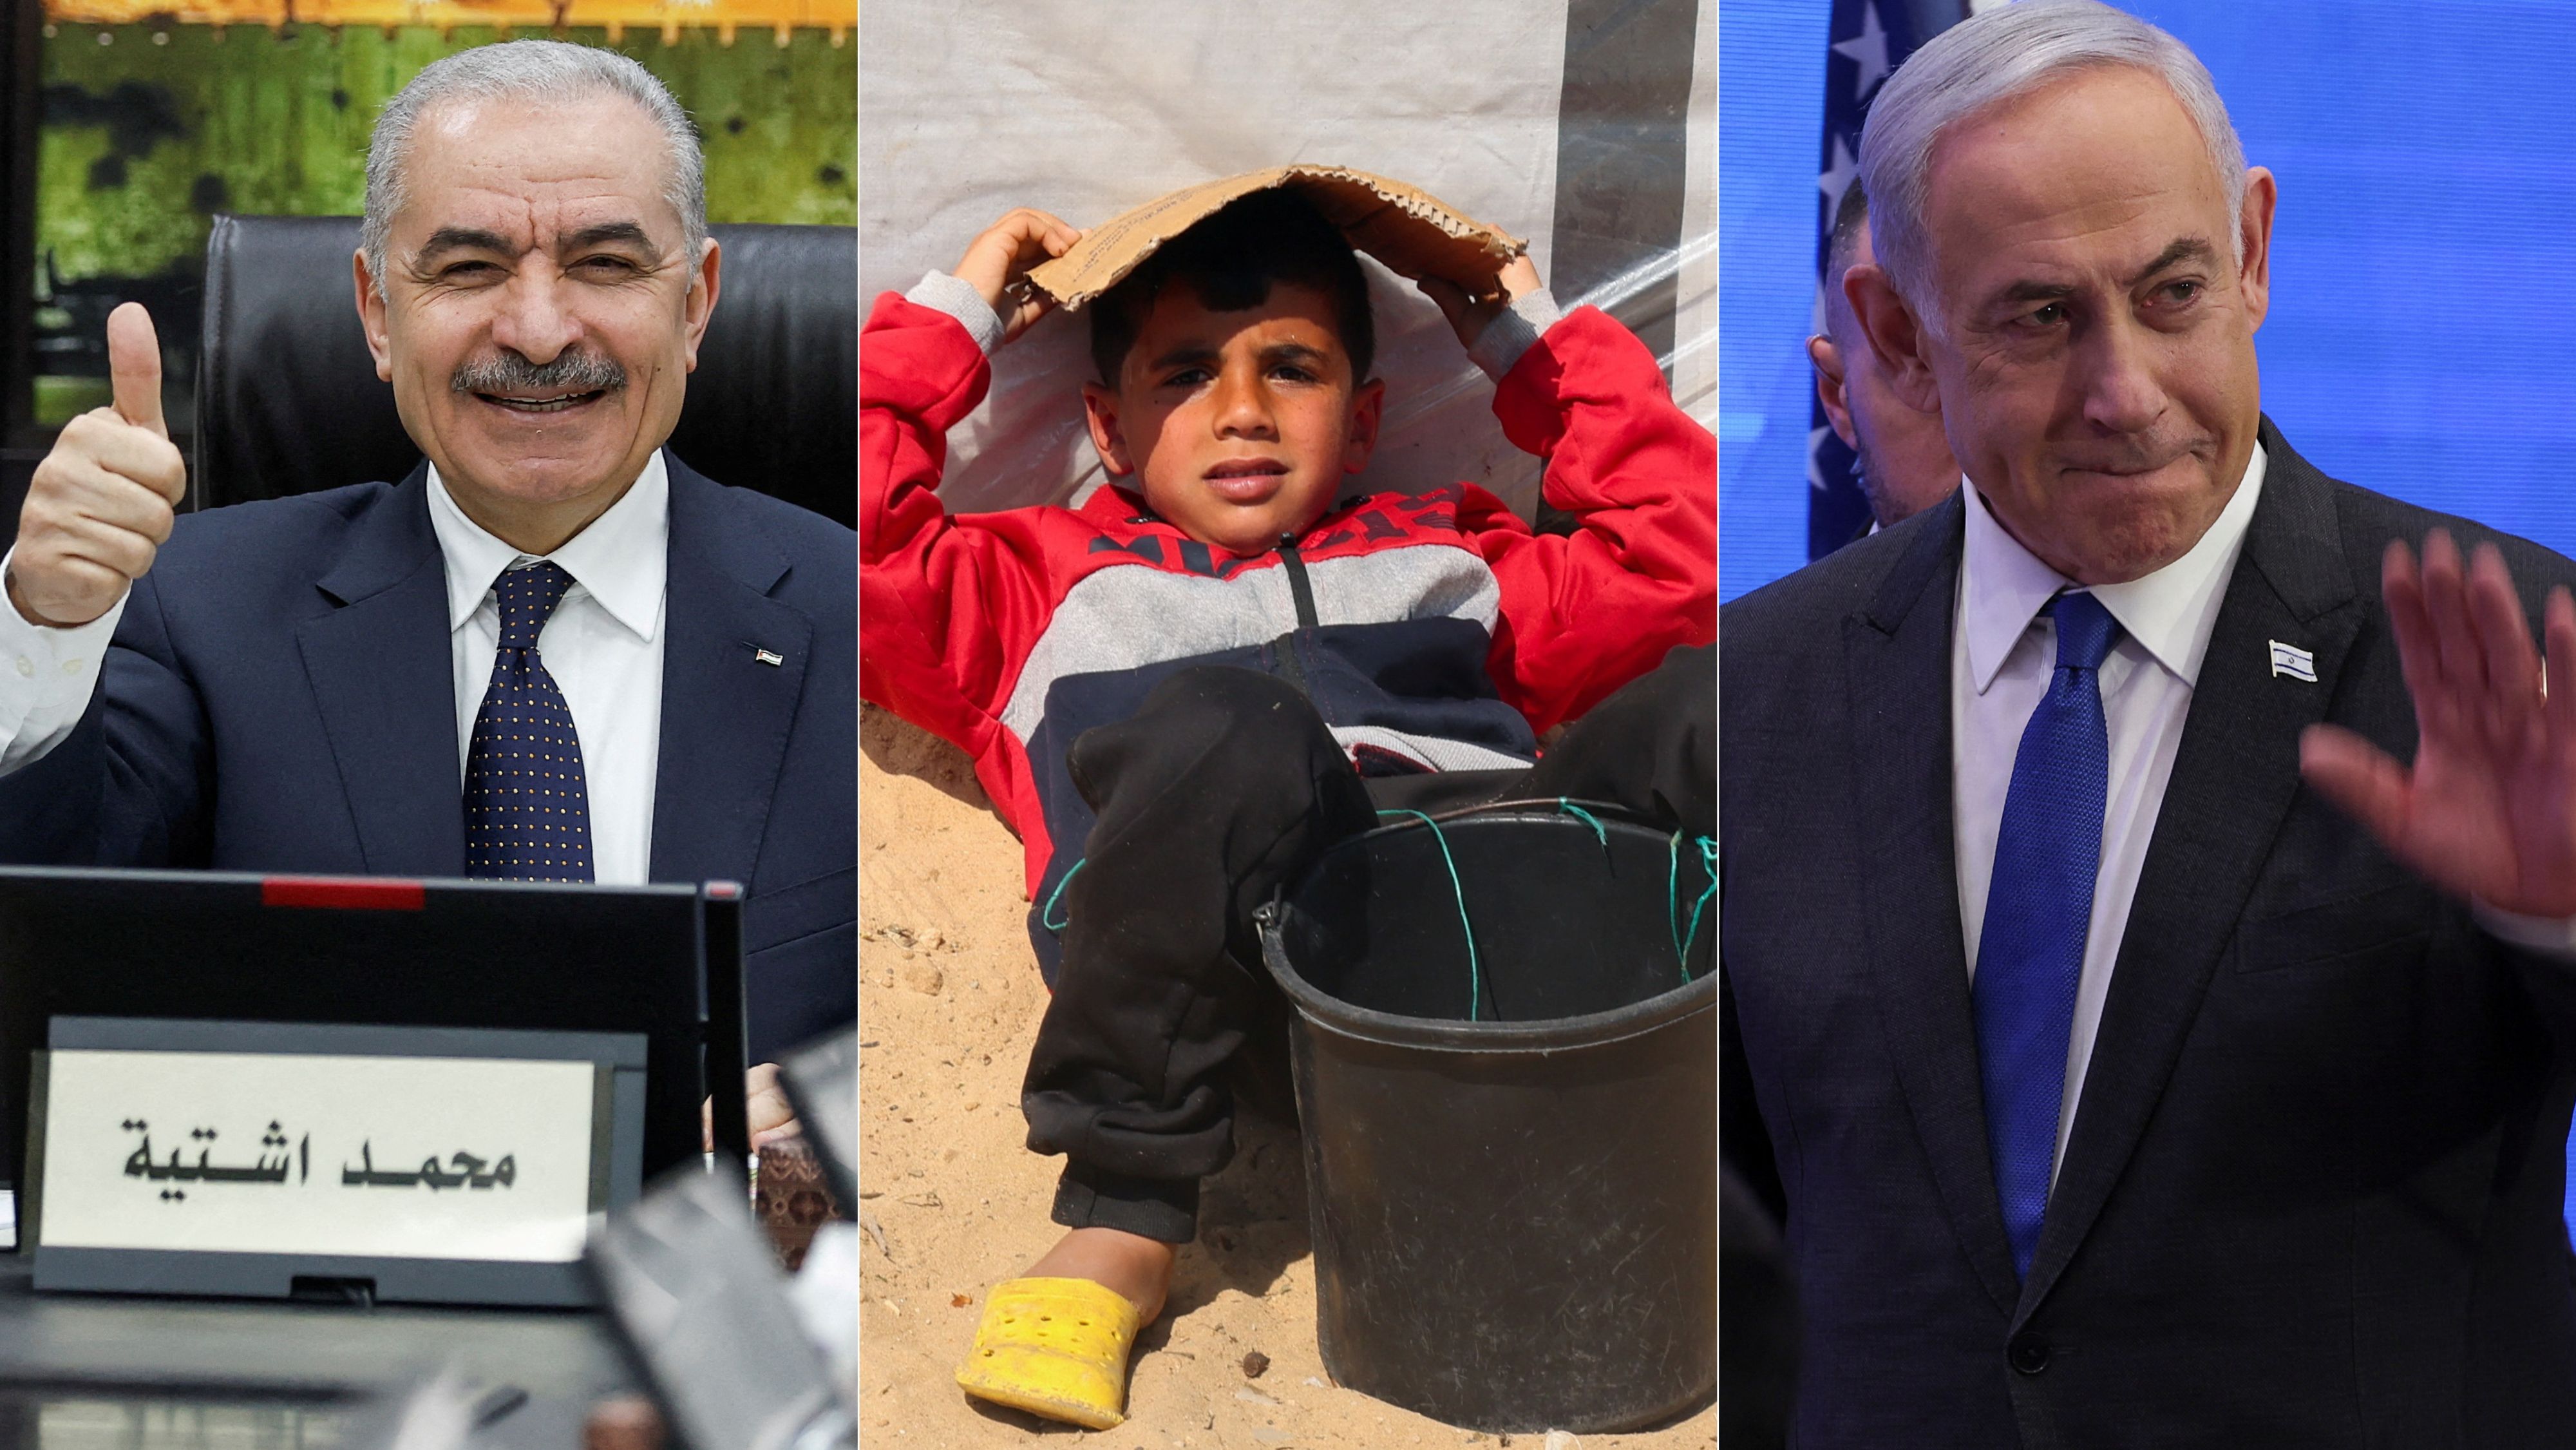 Palestinian PM Mohammad Shtayyeh and Israeli PM Benjamin Netanyahu face a tense few days. /Mohammed Torokman, Saleh Salem and Ronen Zvulun/Reuters